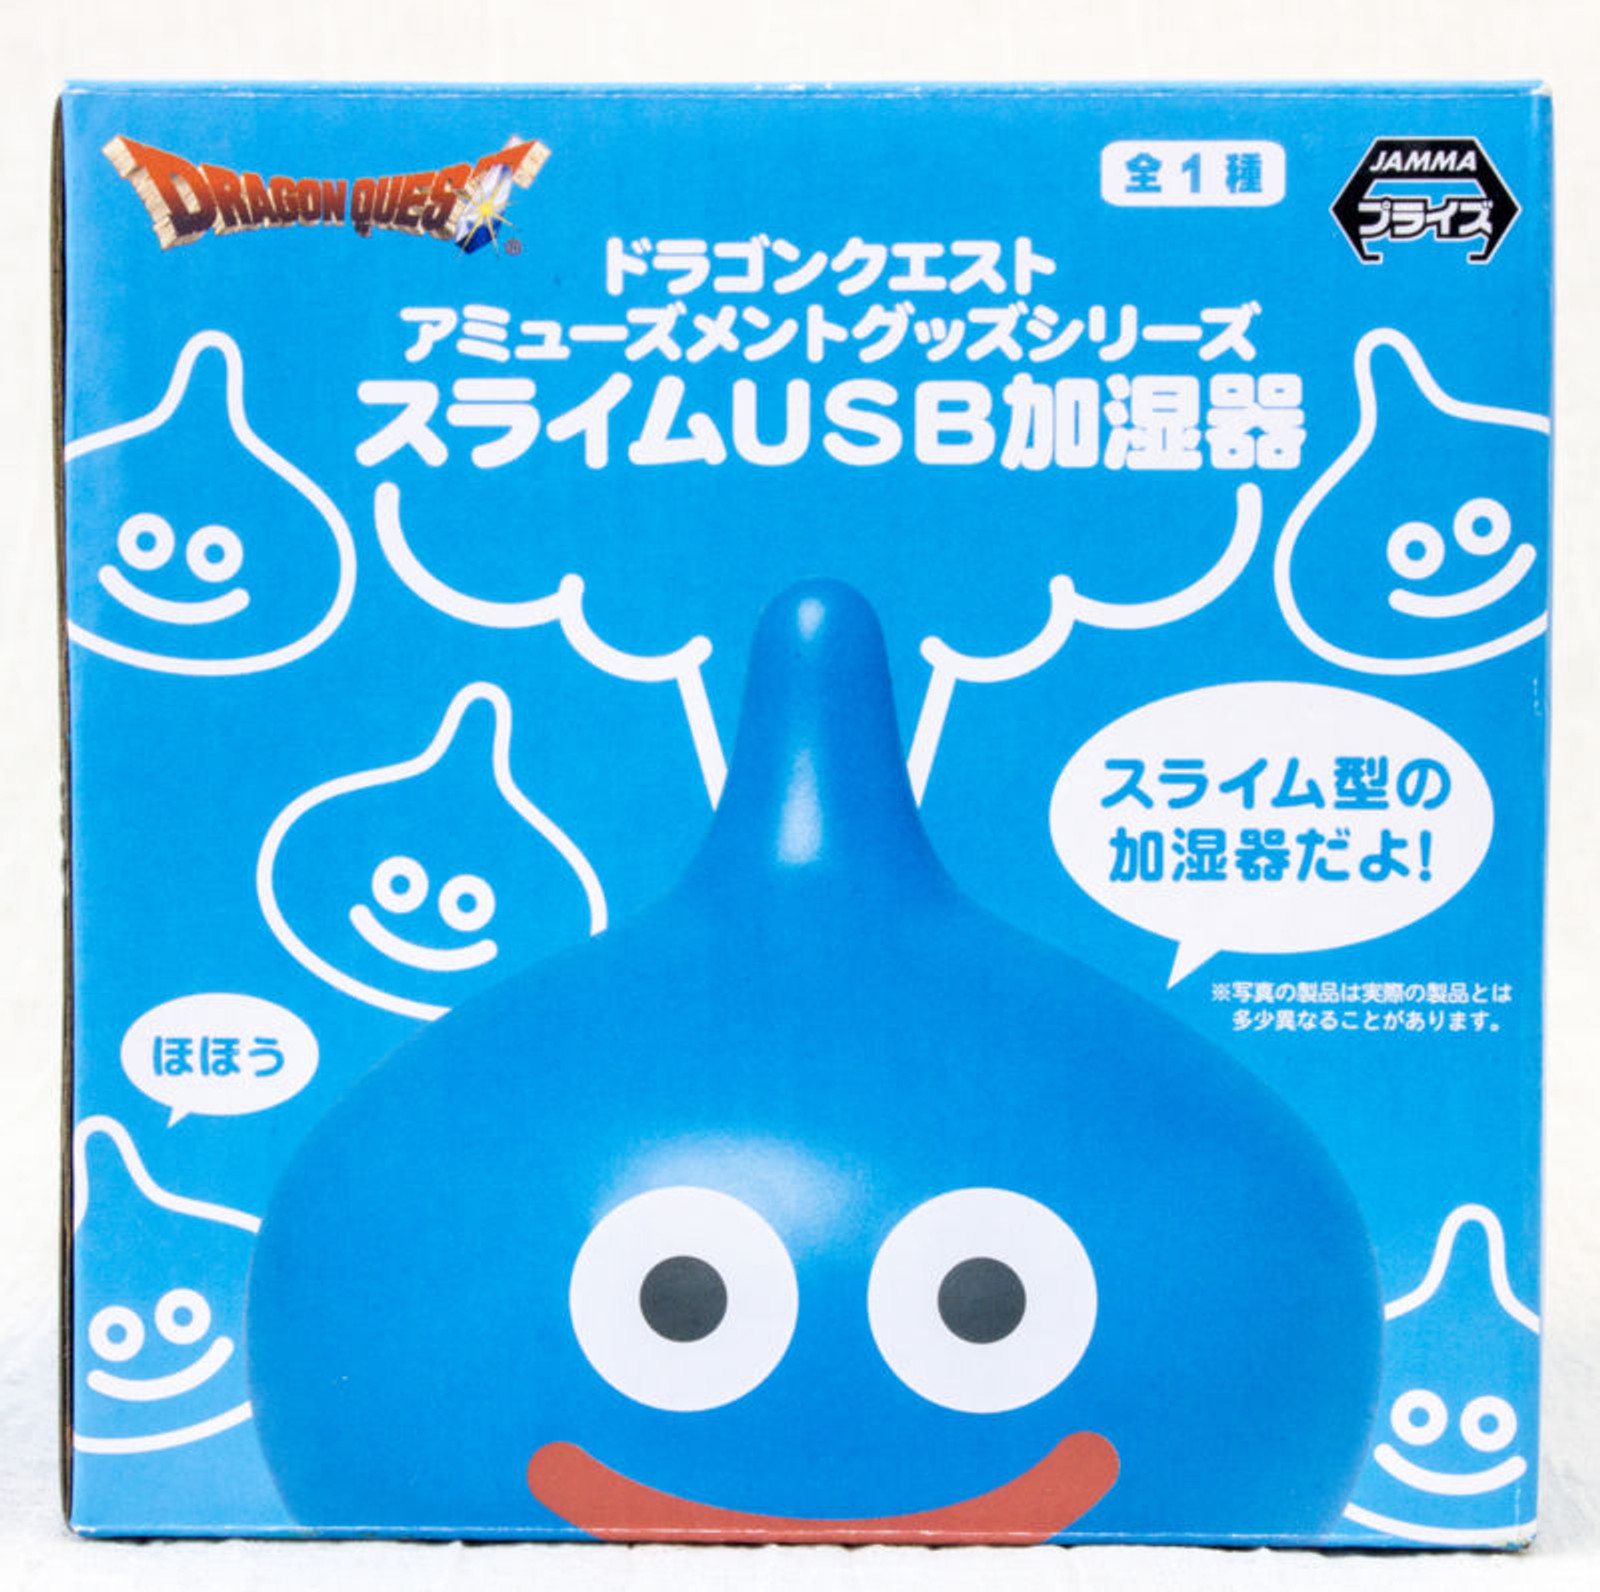 Dragon Quest Monster Slime Figure type USB Humidifier JAPAN ANIME